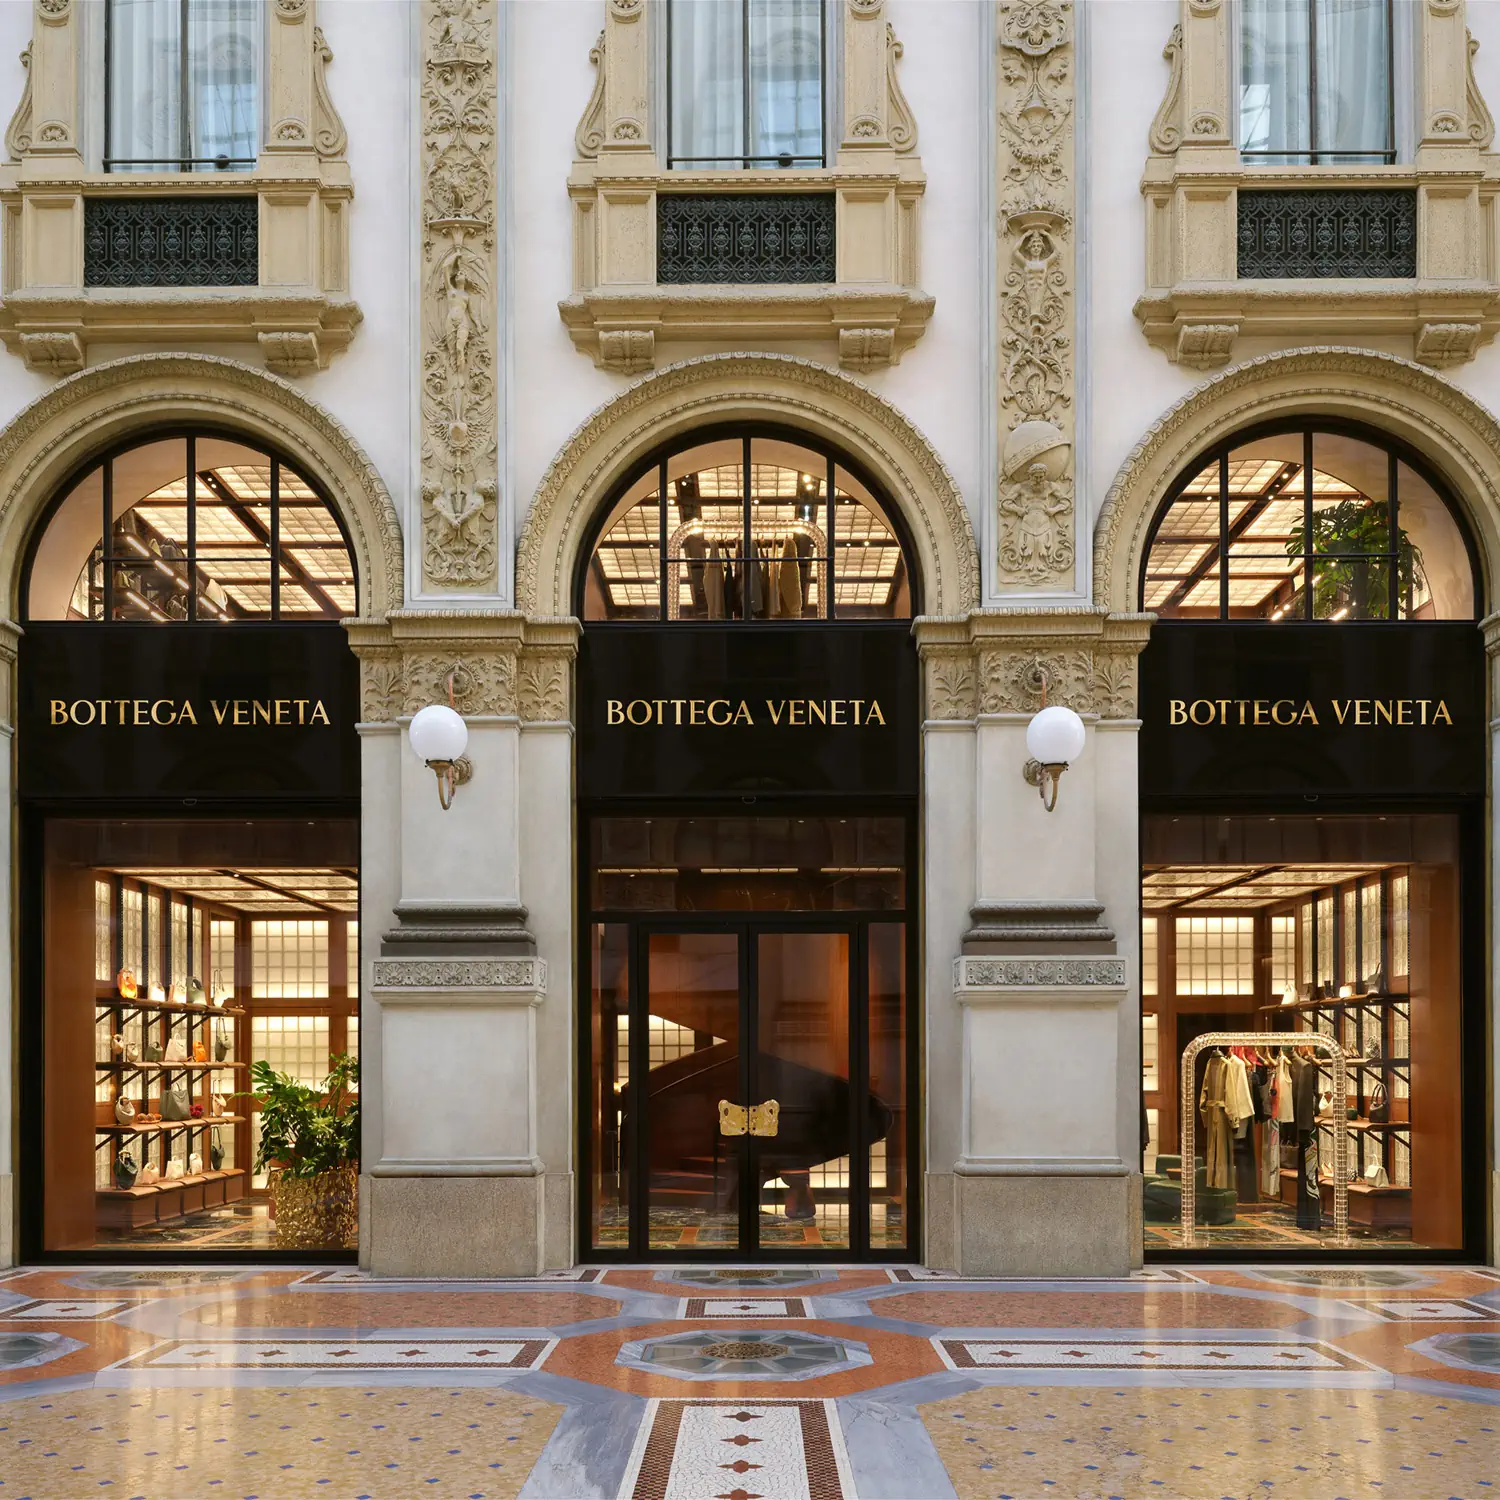 Bottega Veneta opens first store by Matthieu Blazy in Milan's historic Galleria Vittorio Emanuele II